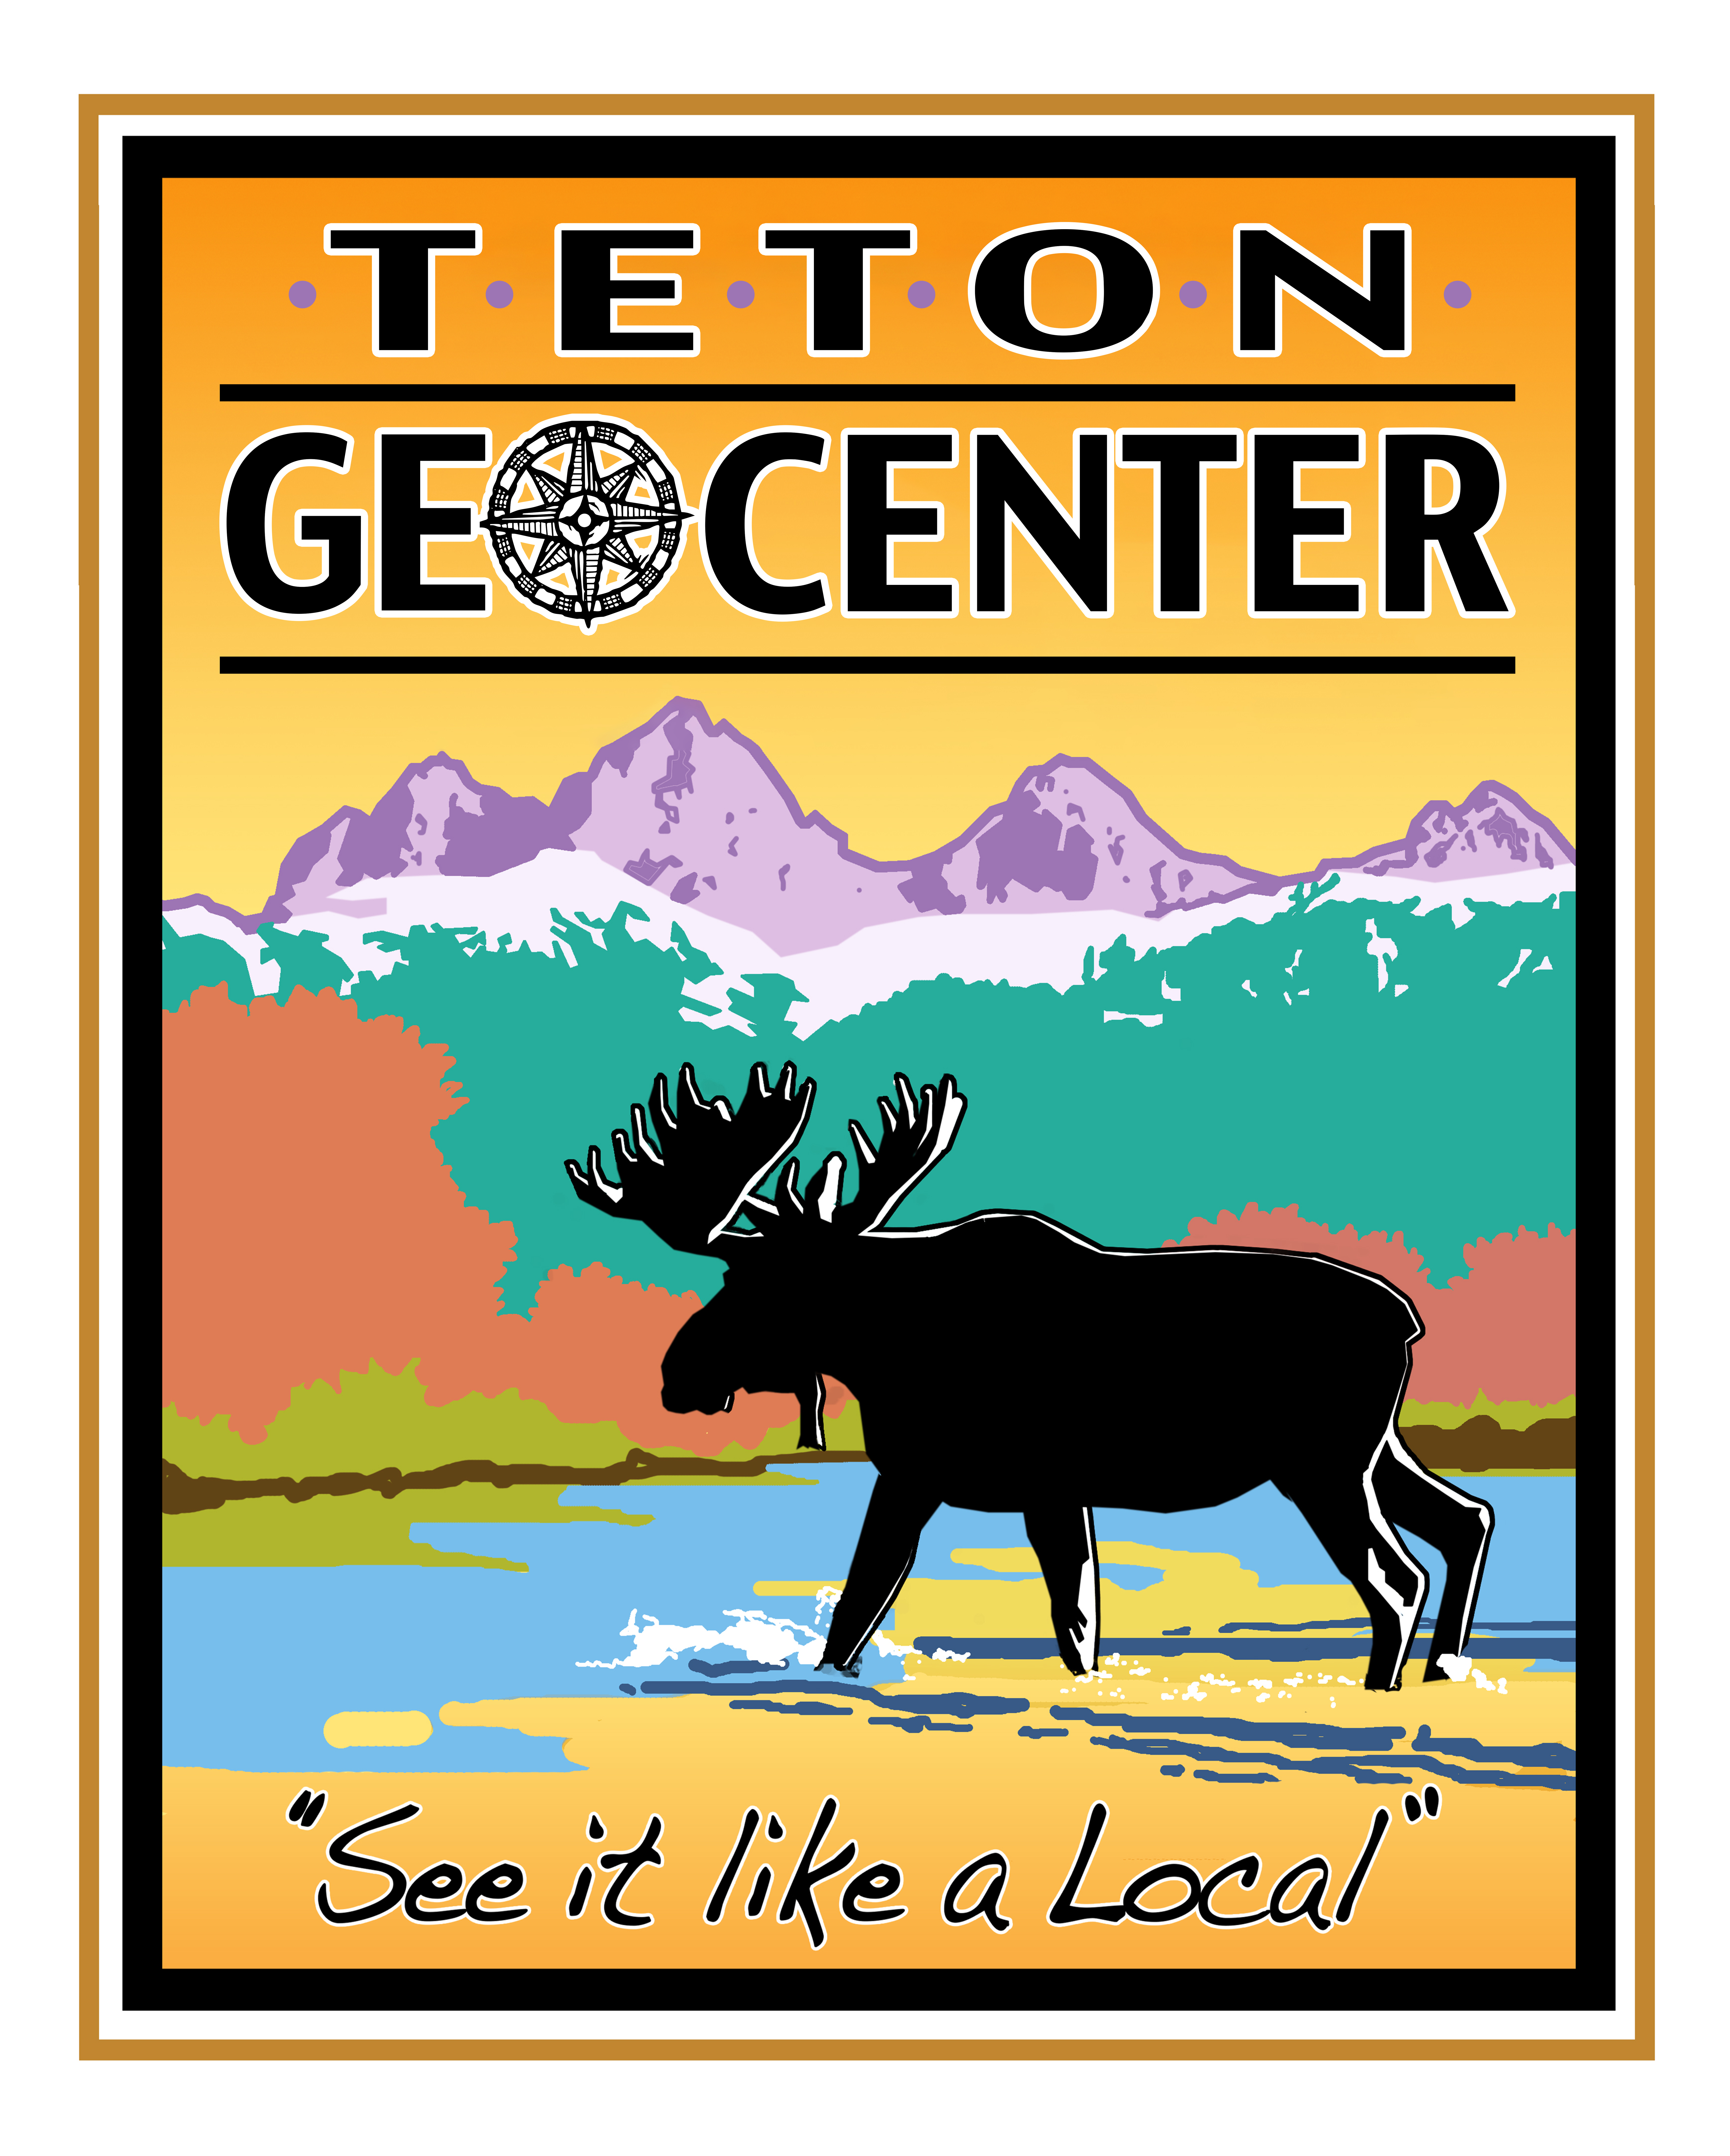 Teton Geo Center